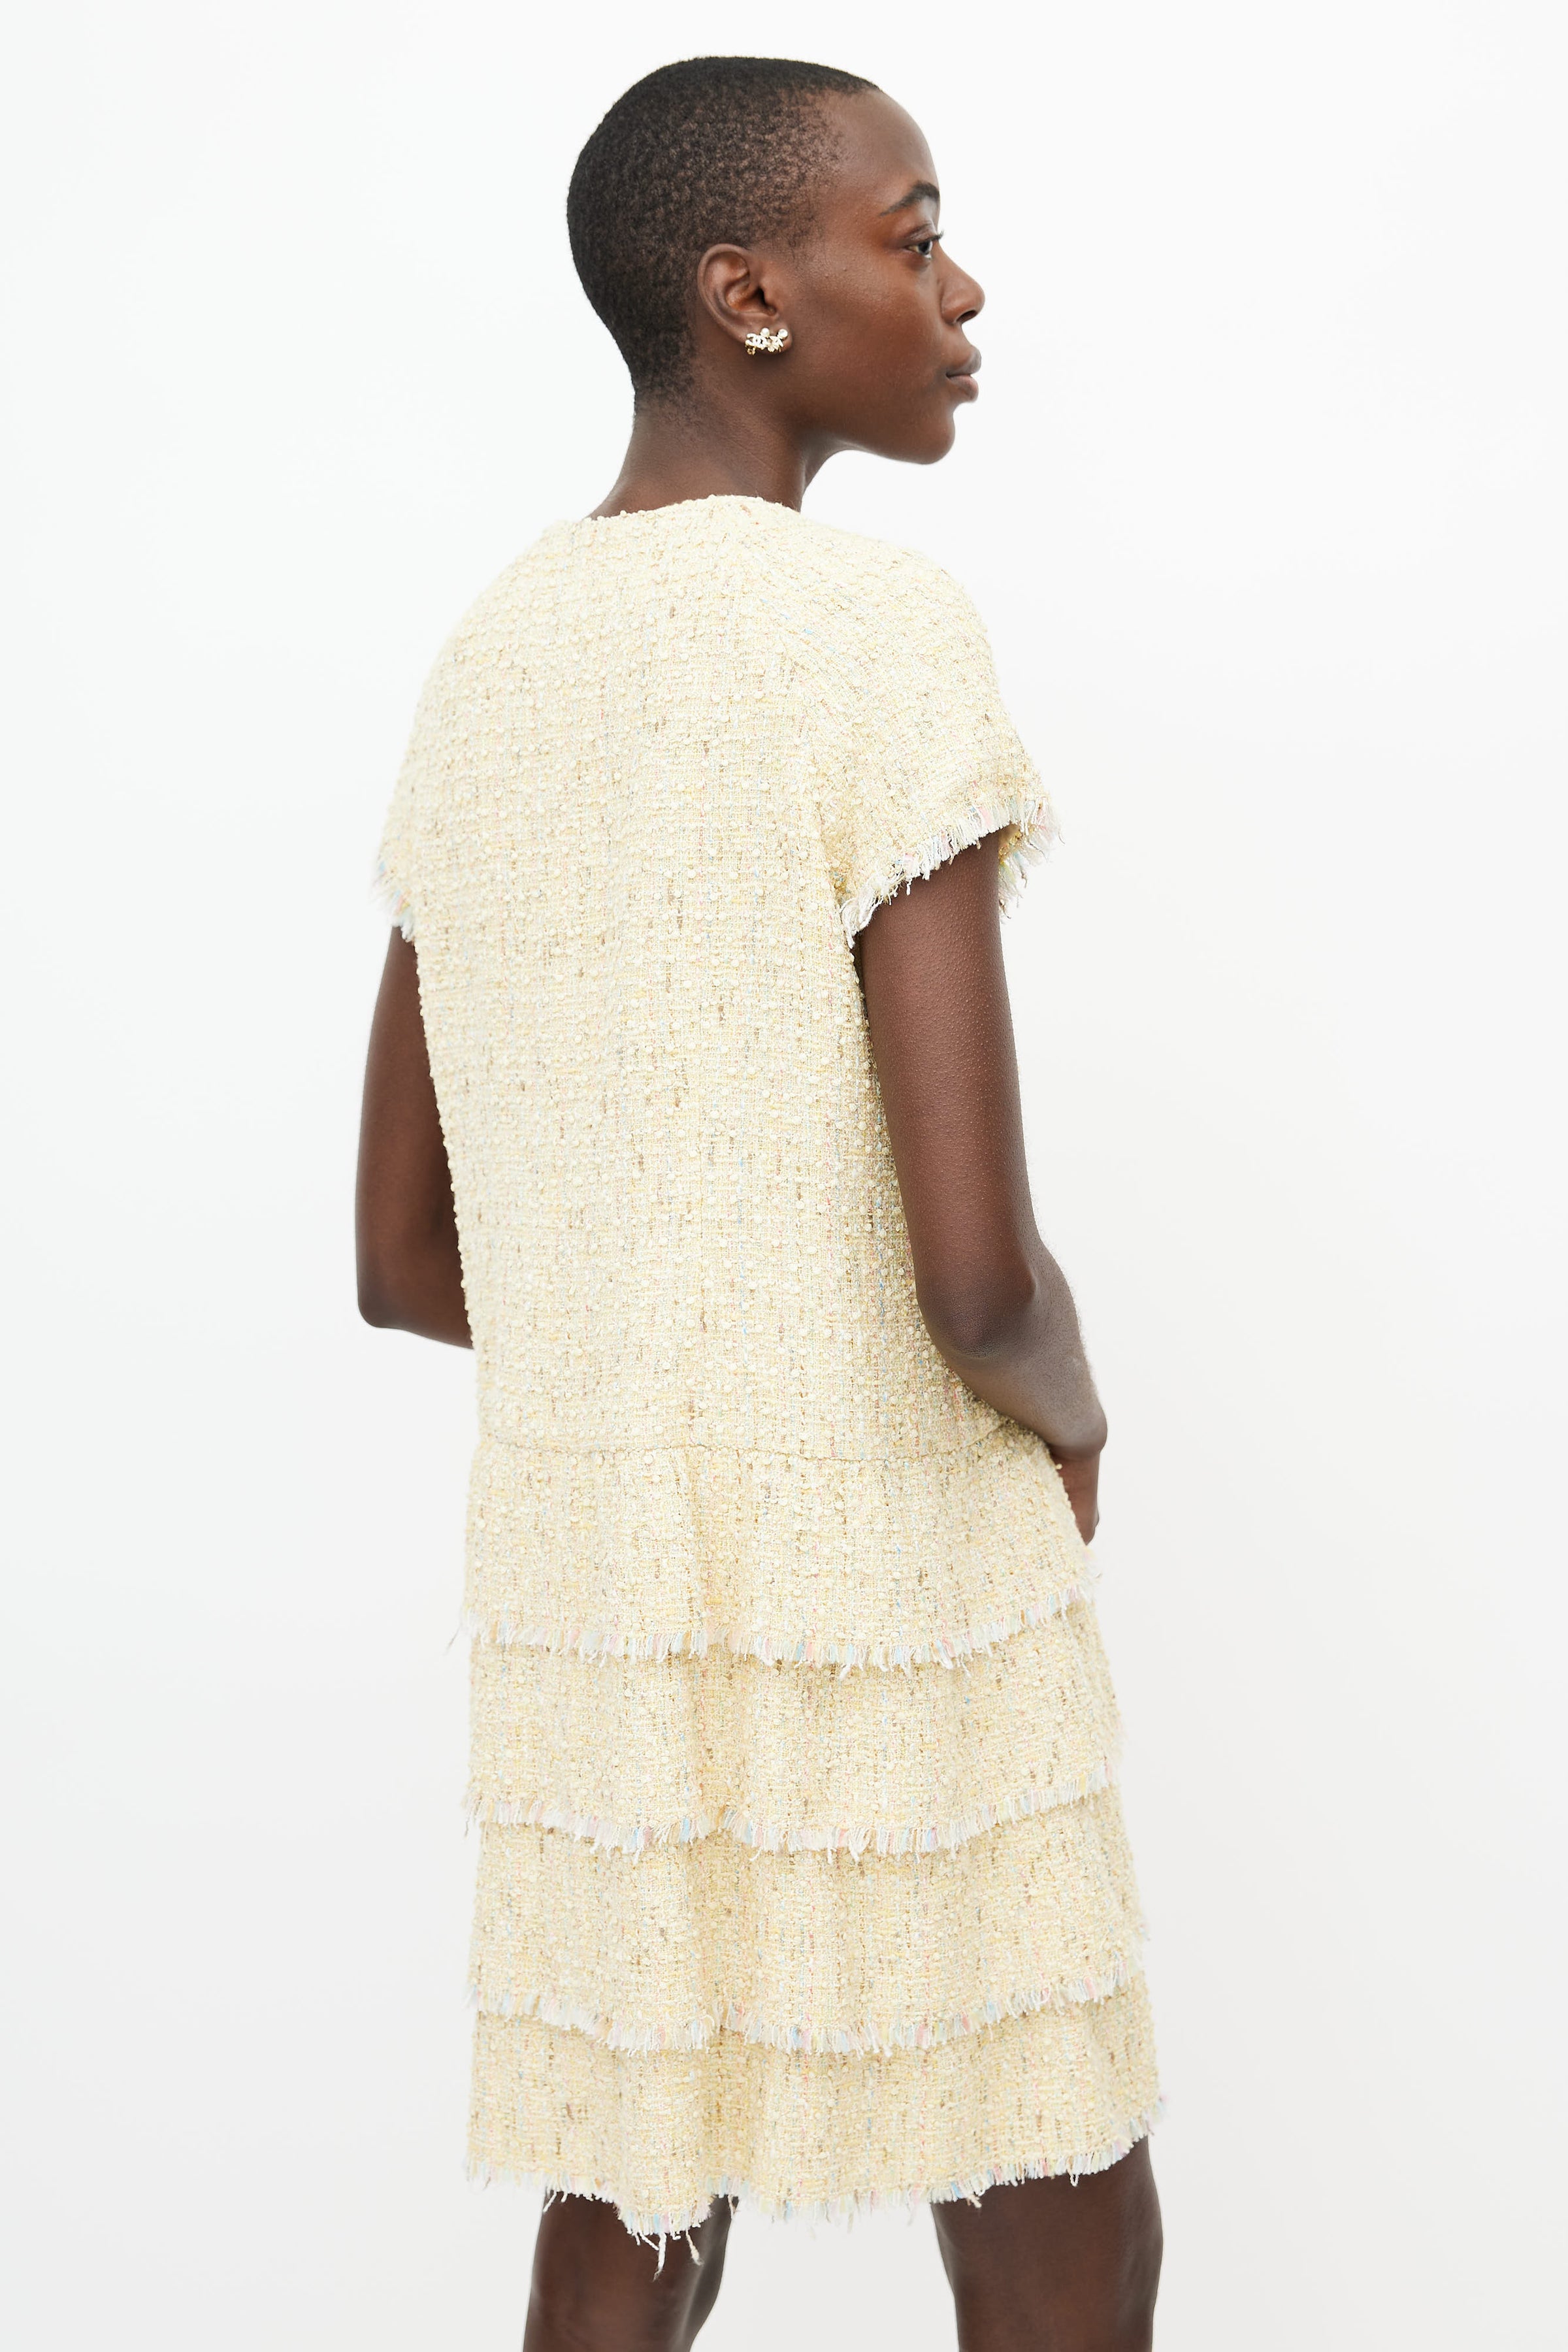 Chanel Cropped Yellow Tweed Jacket  Skirt  Fashion inspo outfits  Fashion Rental fashion